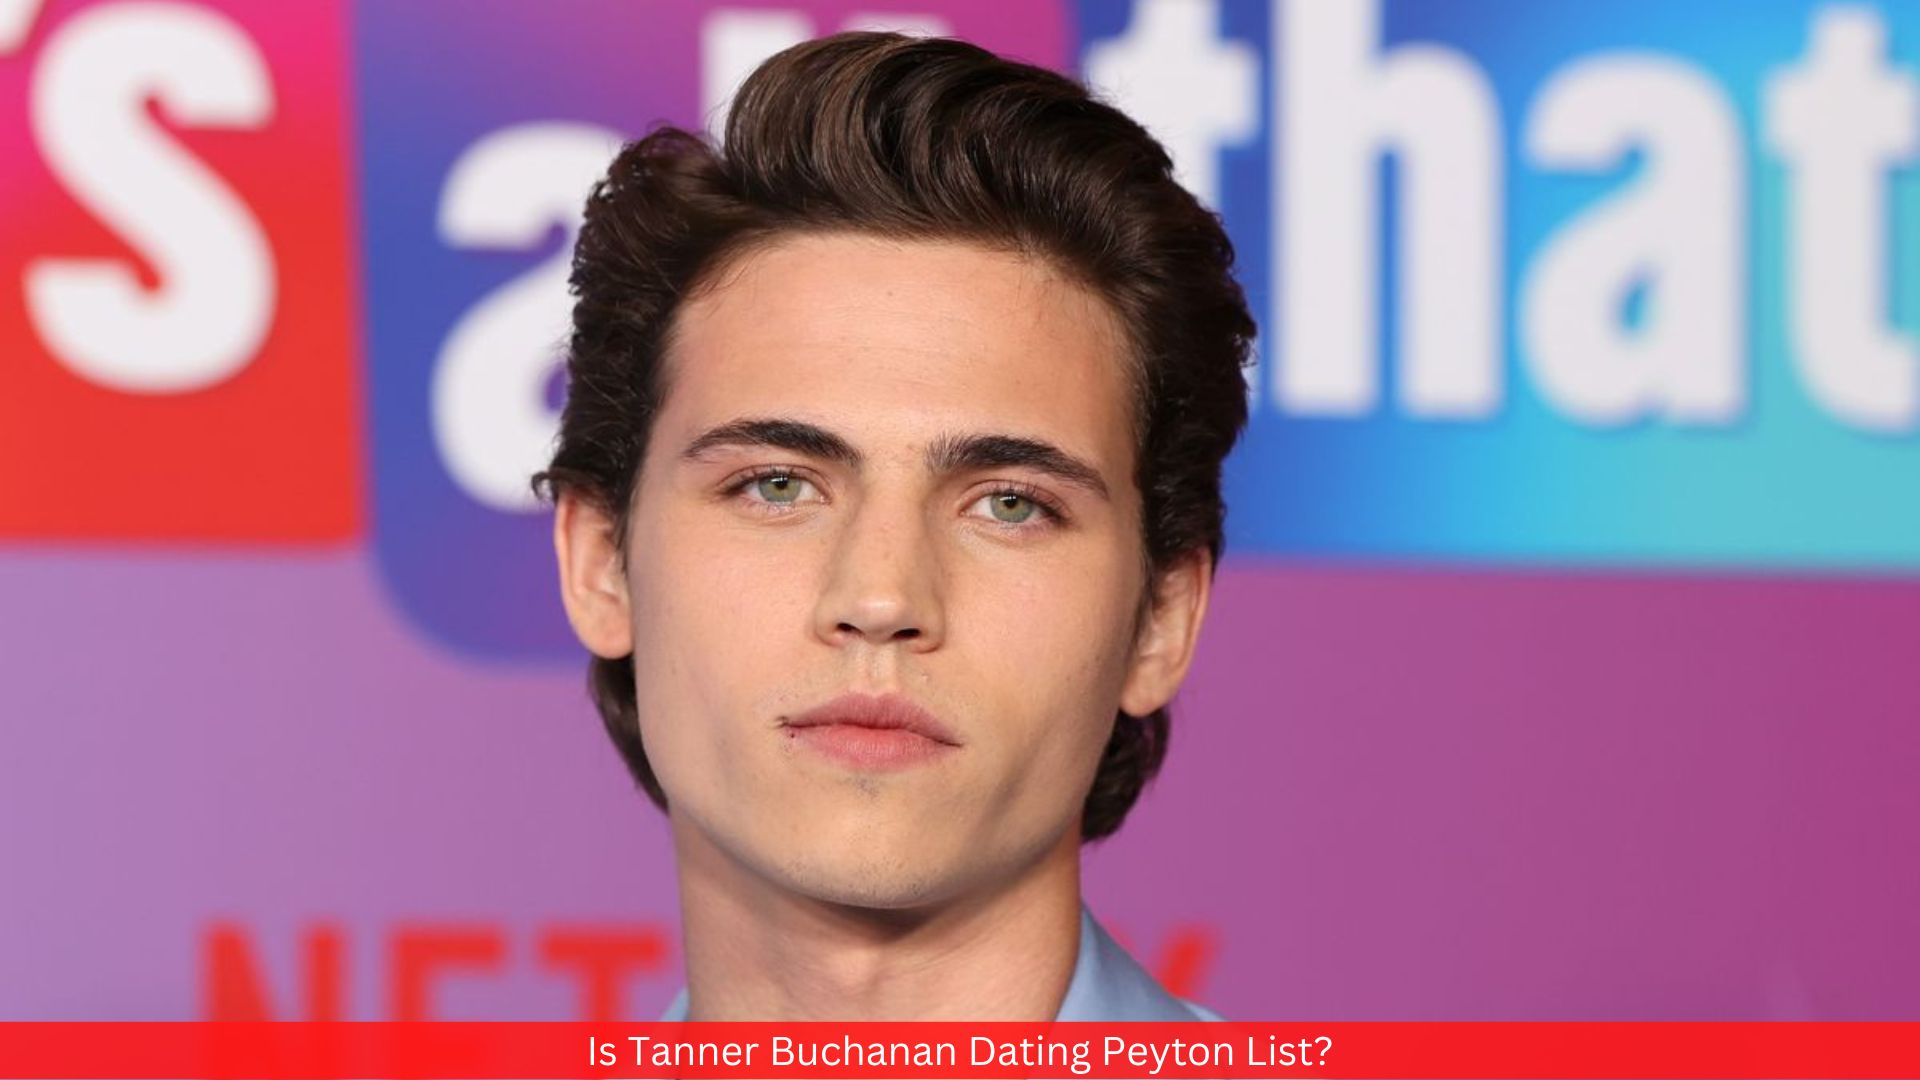 Is Tanner Buchanan Dating Peyton List?